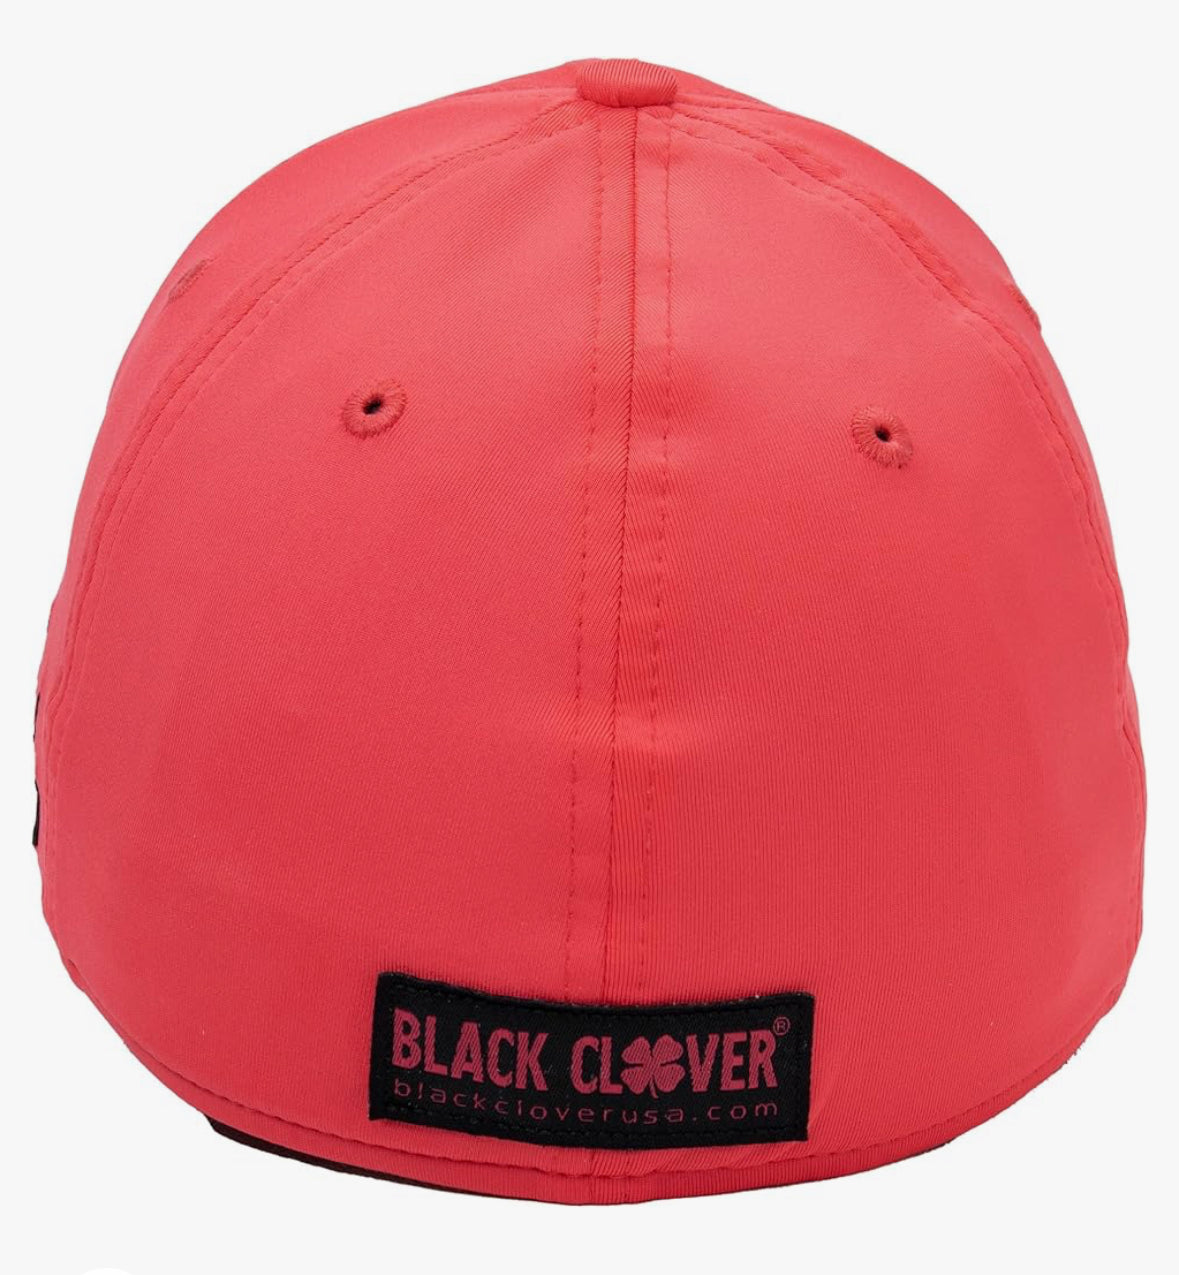 Black Clover Premium Clover 98 Psych Pink L/XL